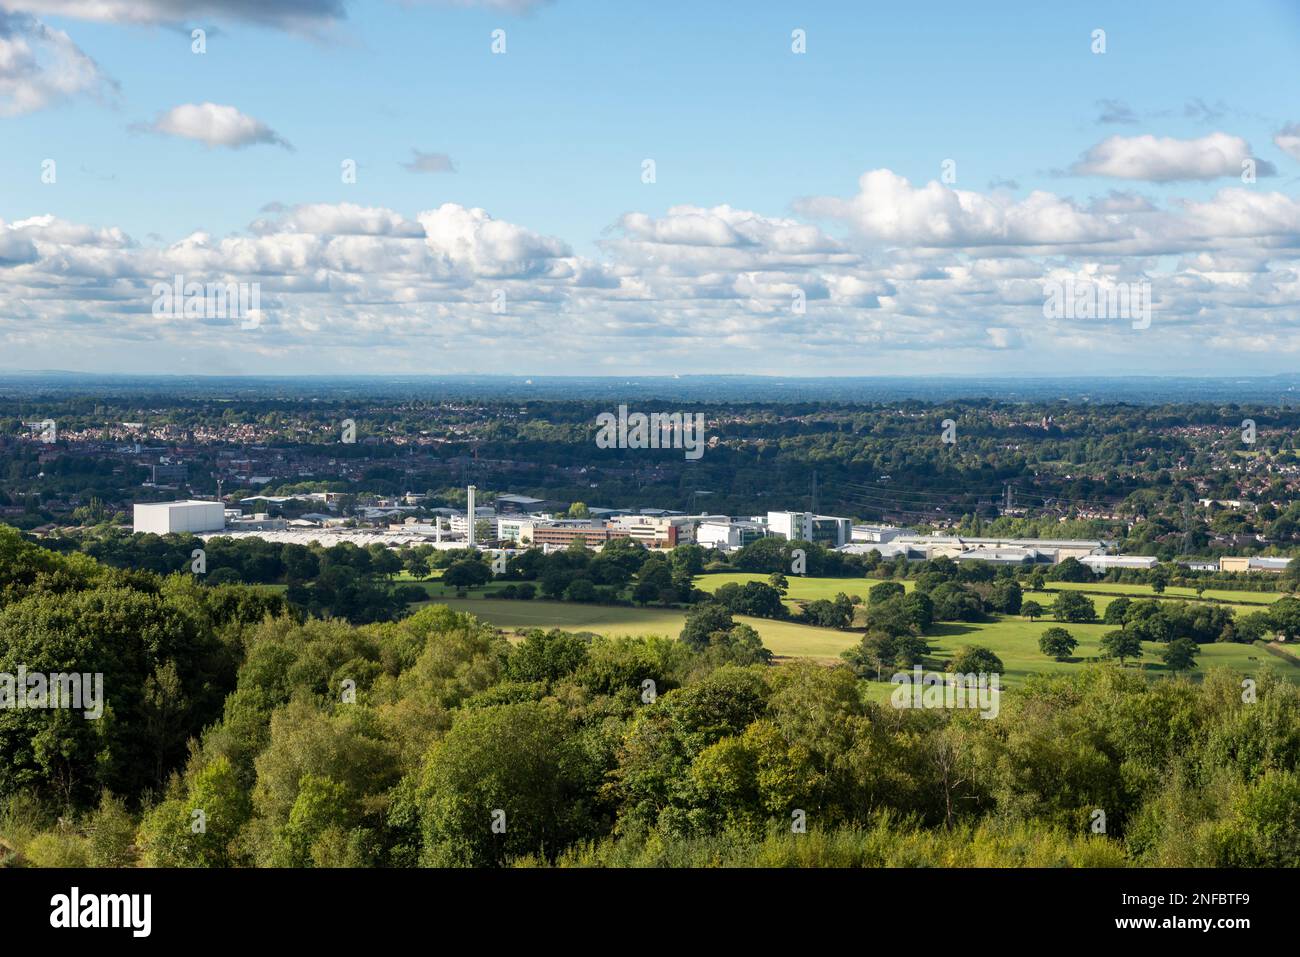 La ville de Macclesfield vue de Kerridge Hill, Cheshire, Angleterre. Banque D'Images